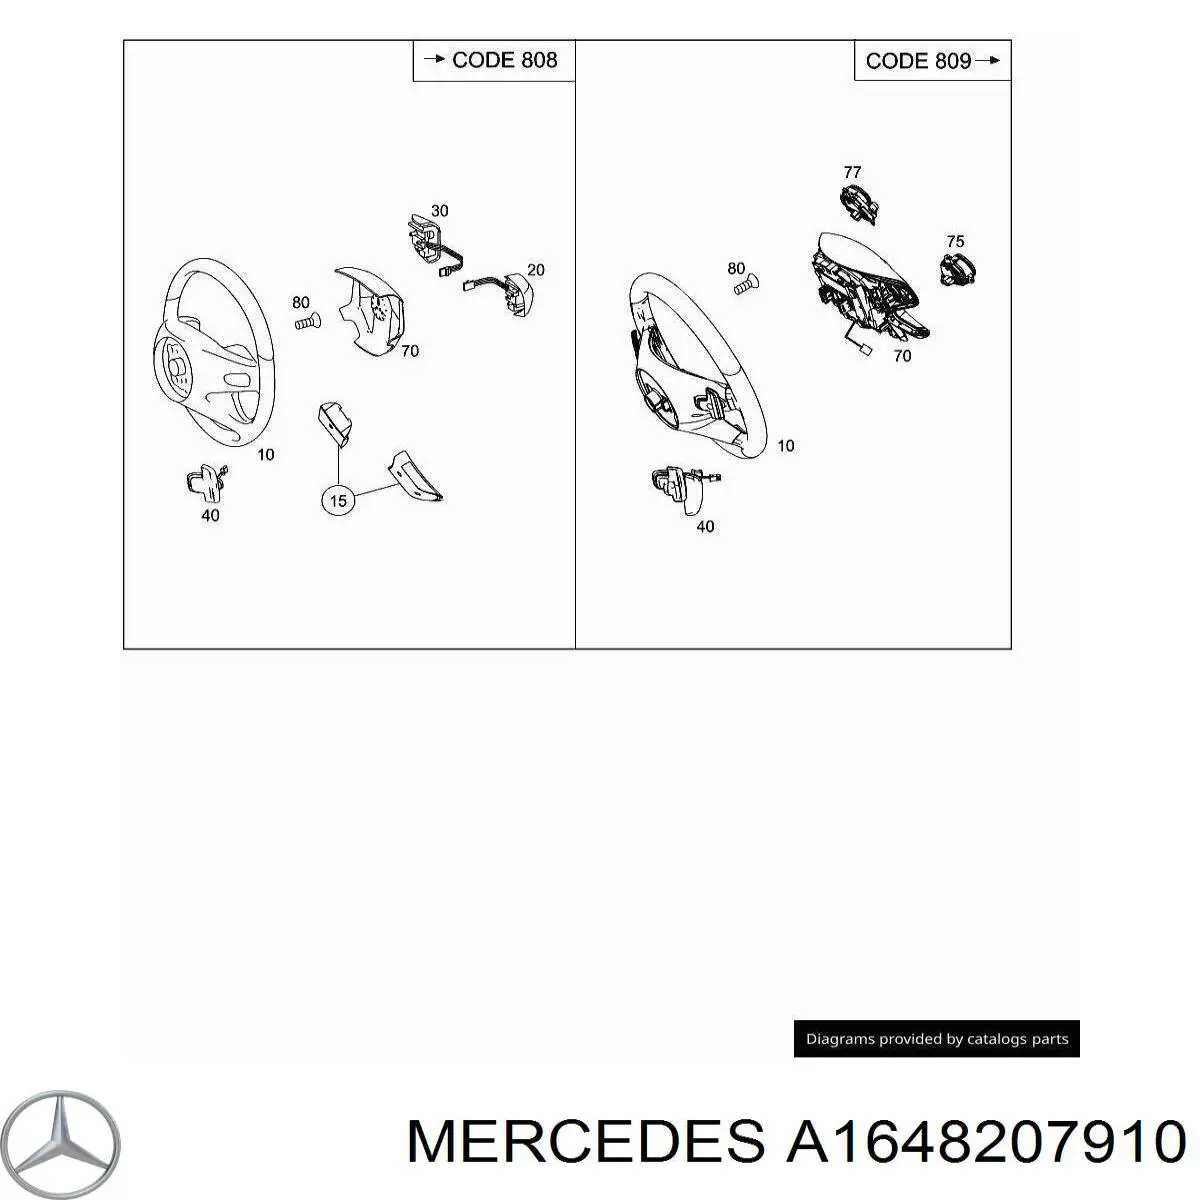 A1648207910 Mercedes